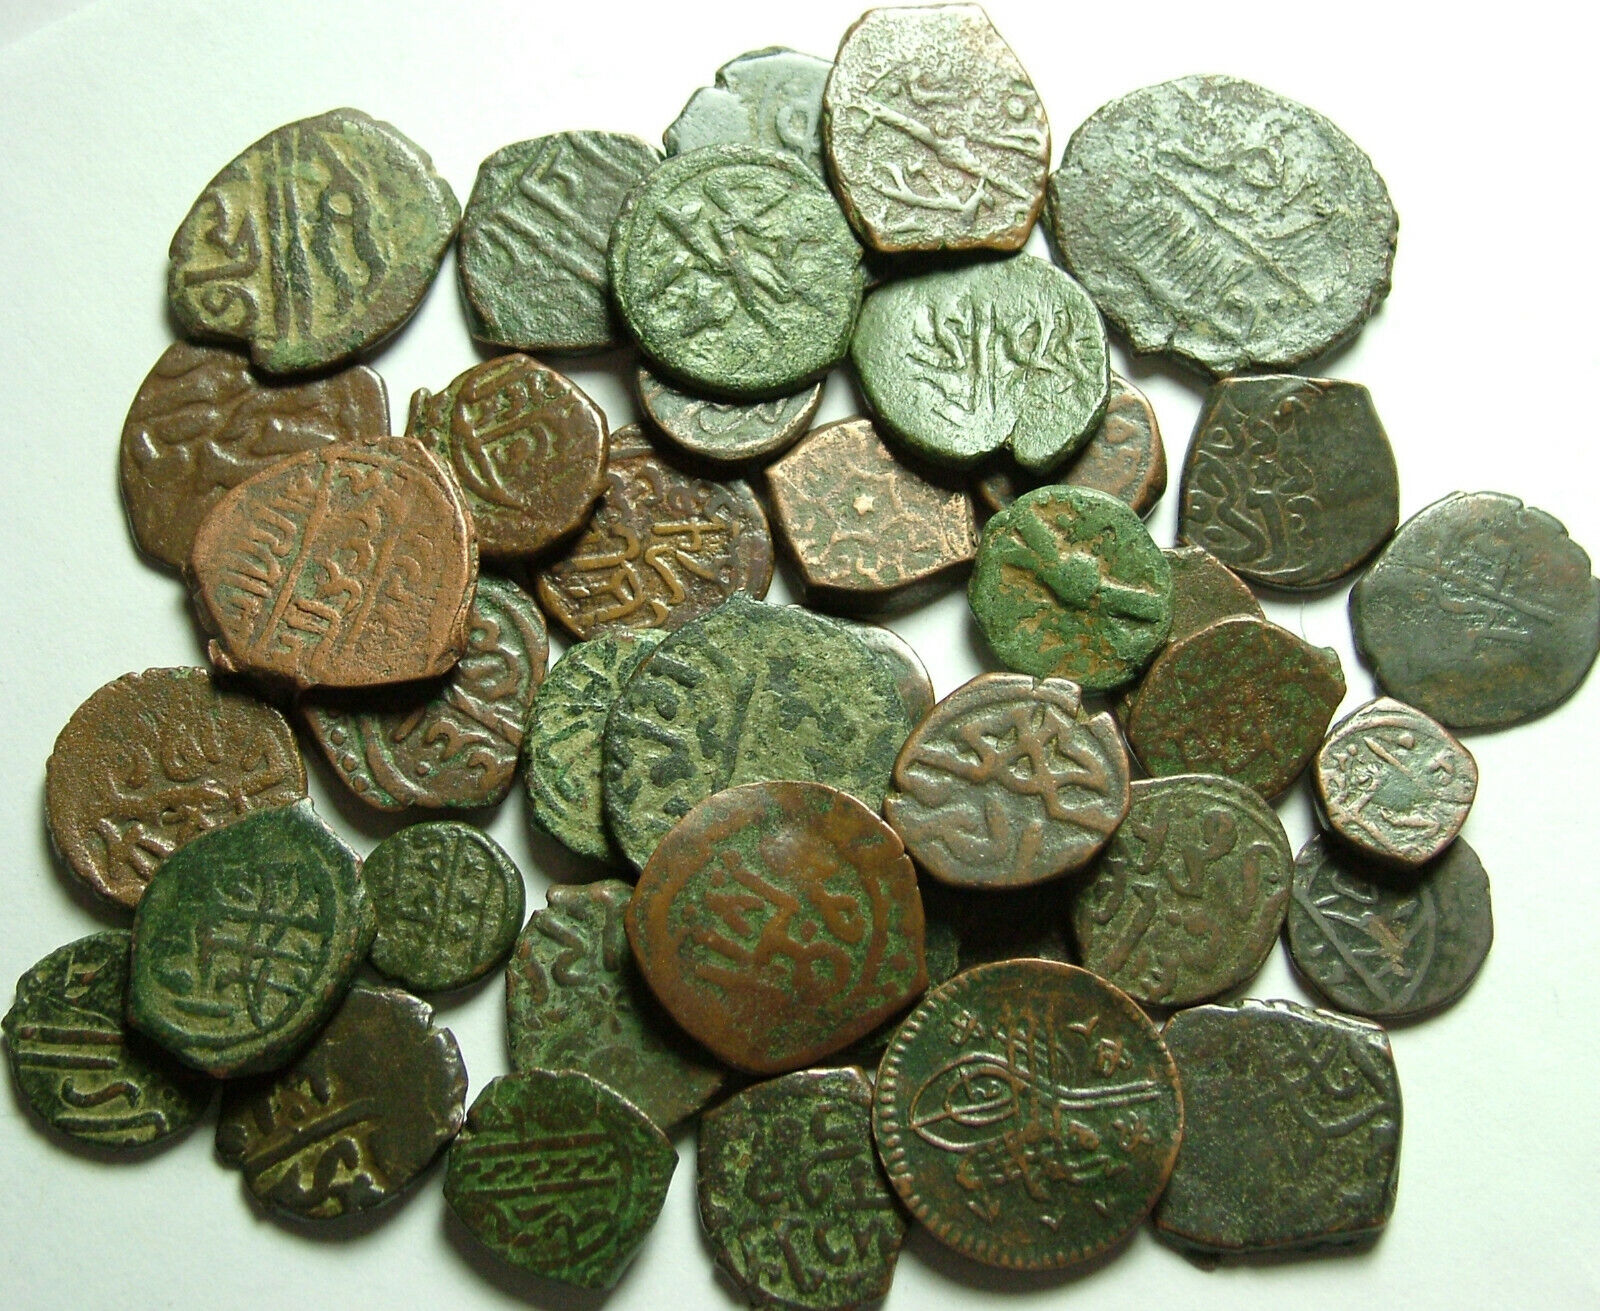 Lot 3 Rare original Islamic copper Bronze Mangir coins/Arabic/Ottoman Empire 15c Без бренда - фотография #4